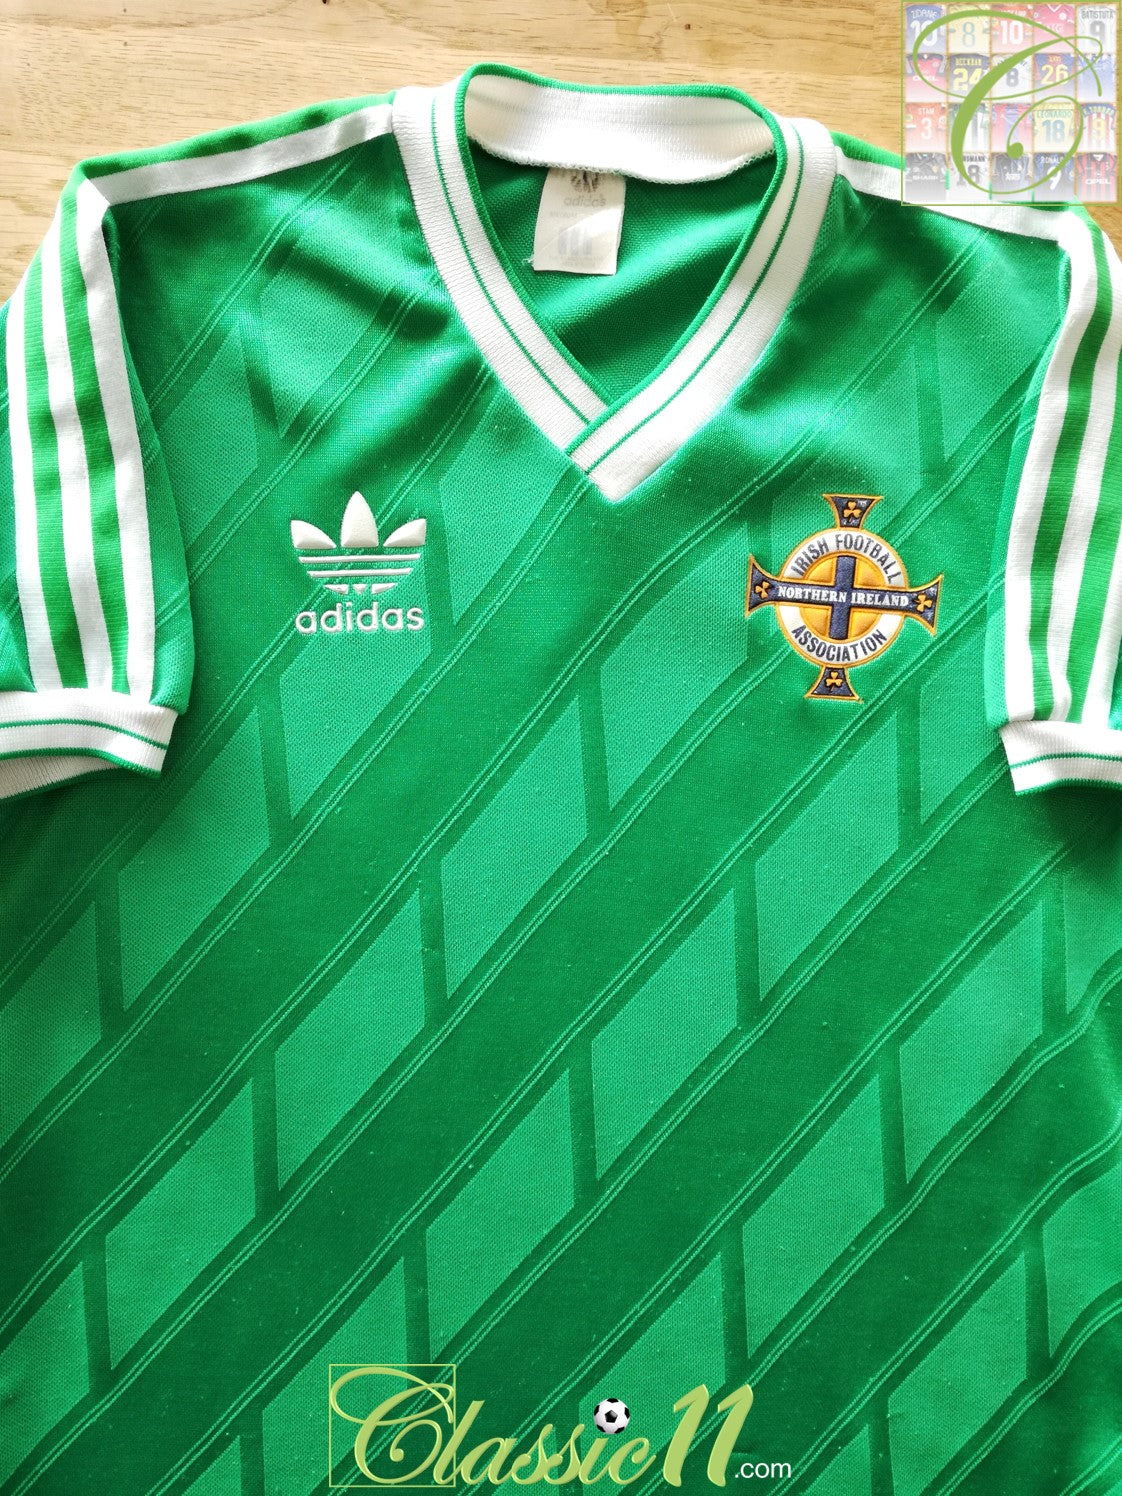 Northern Ireland men's national team old-school souvenirs